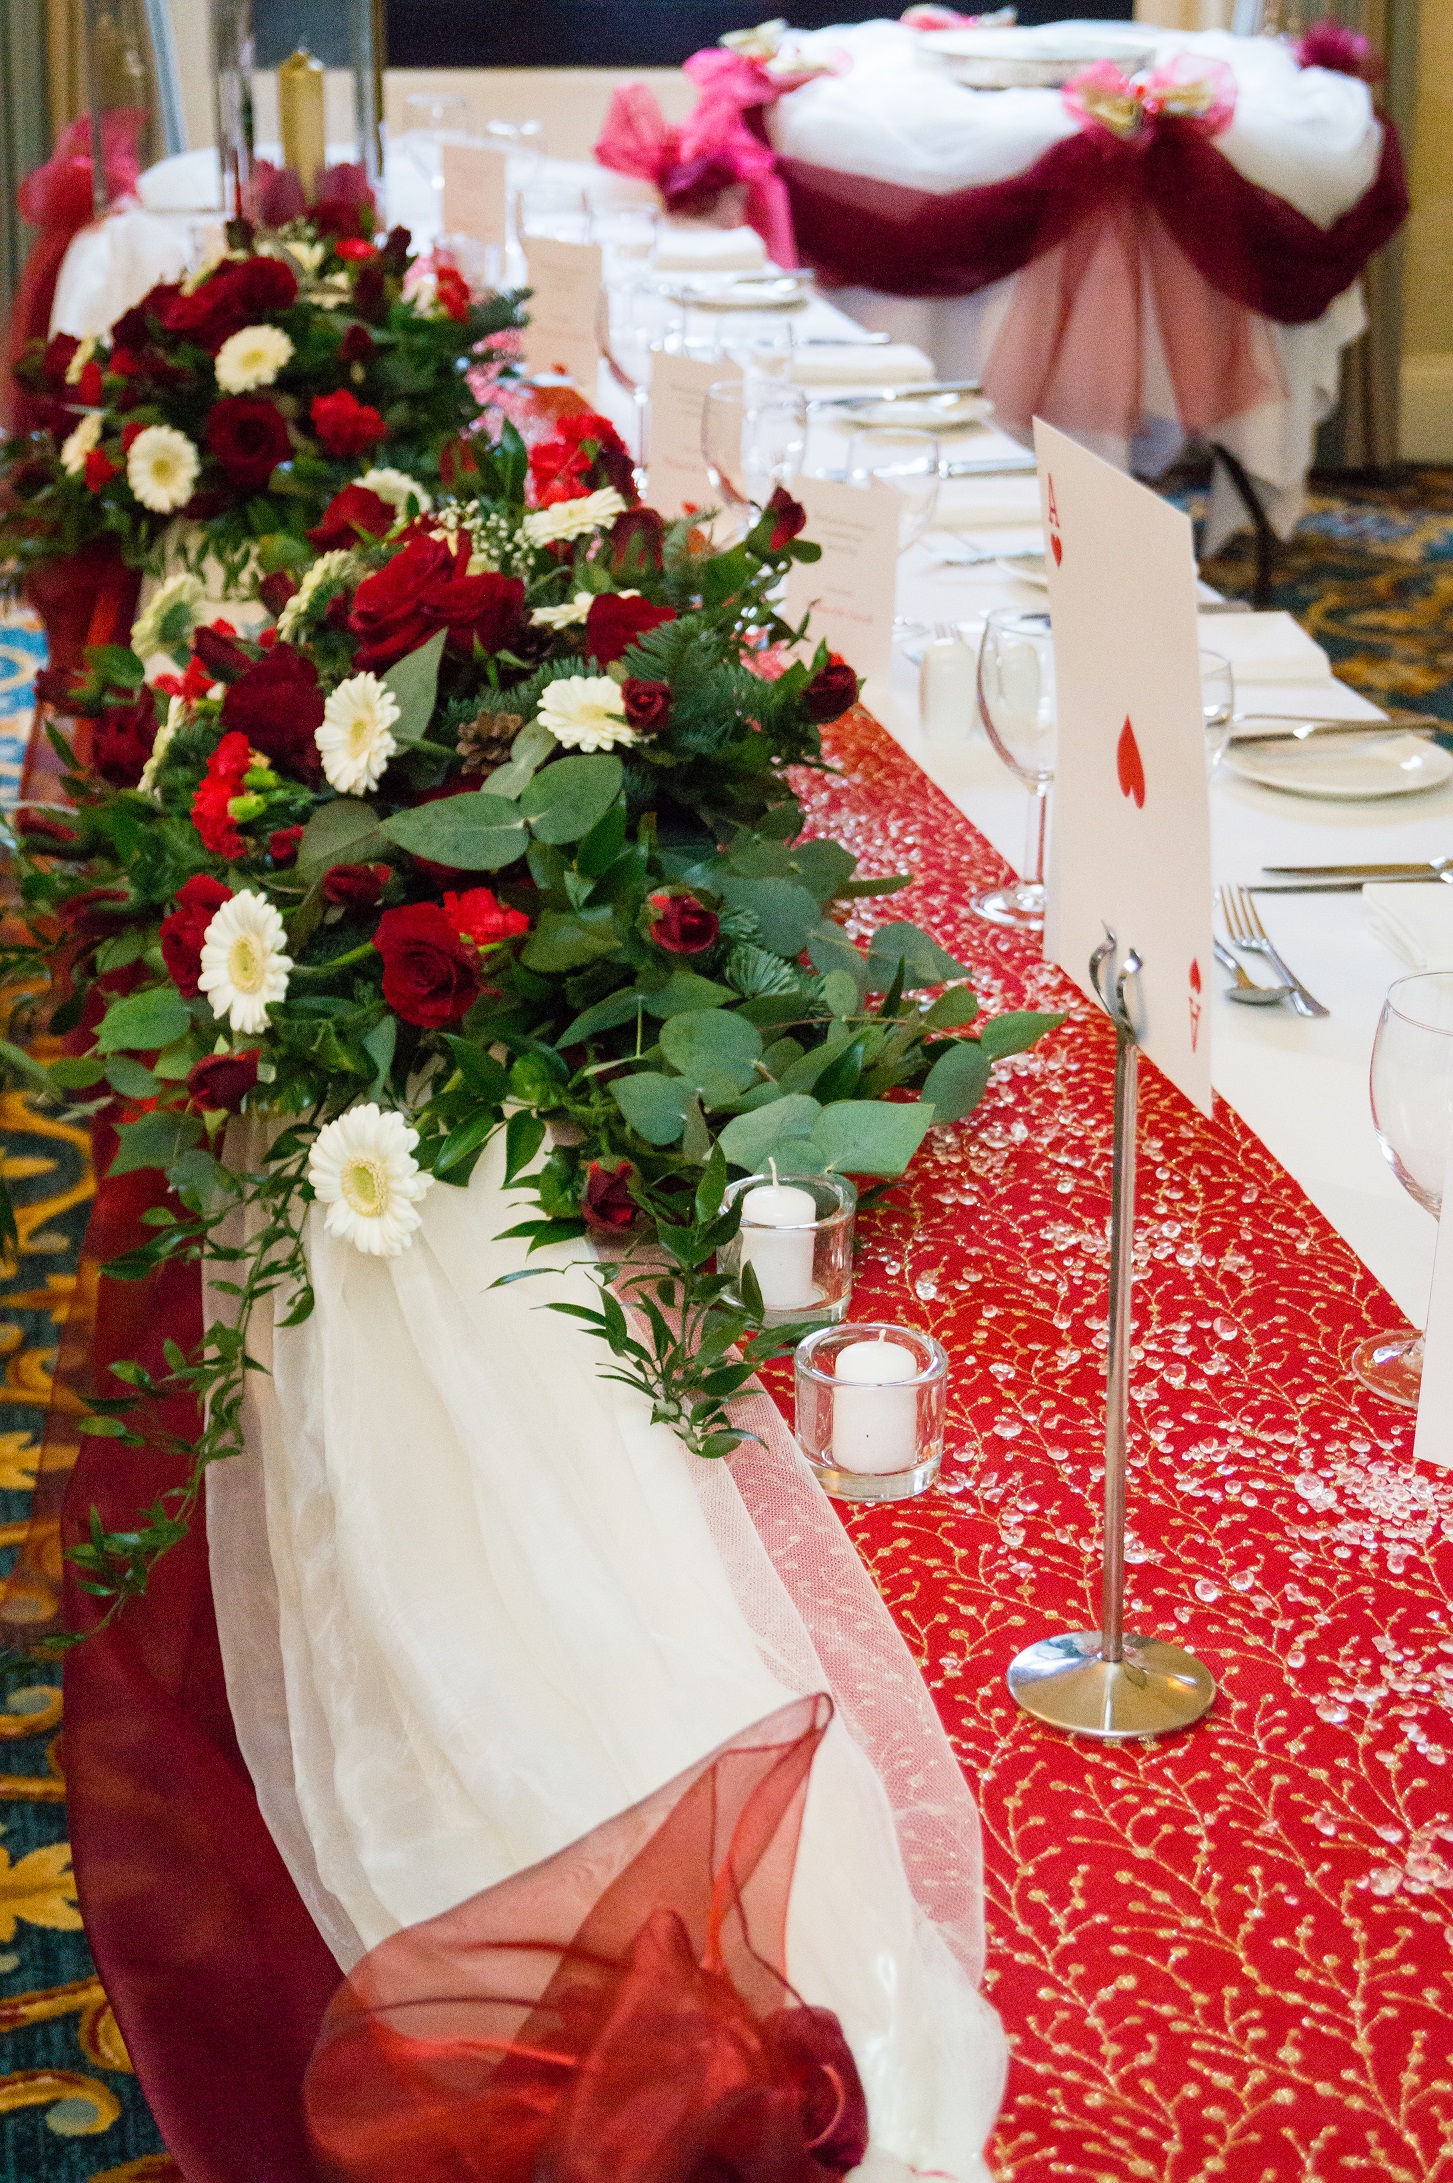 Hanbury Manor Wedding, Hertfordshire, wedding table decorations, red table flowers